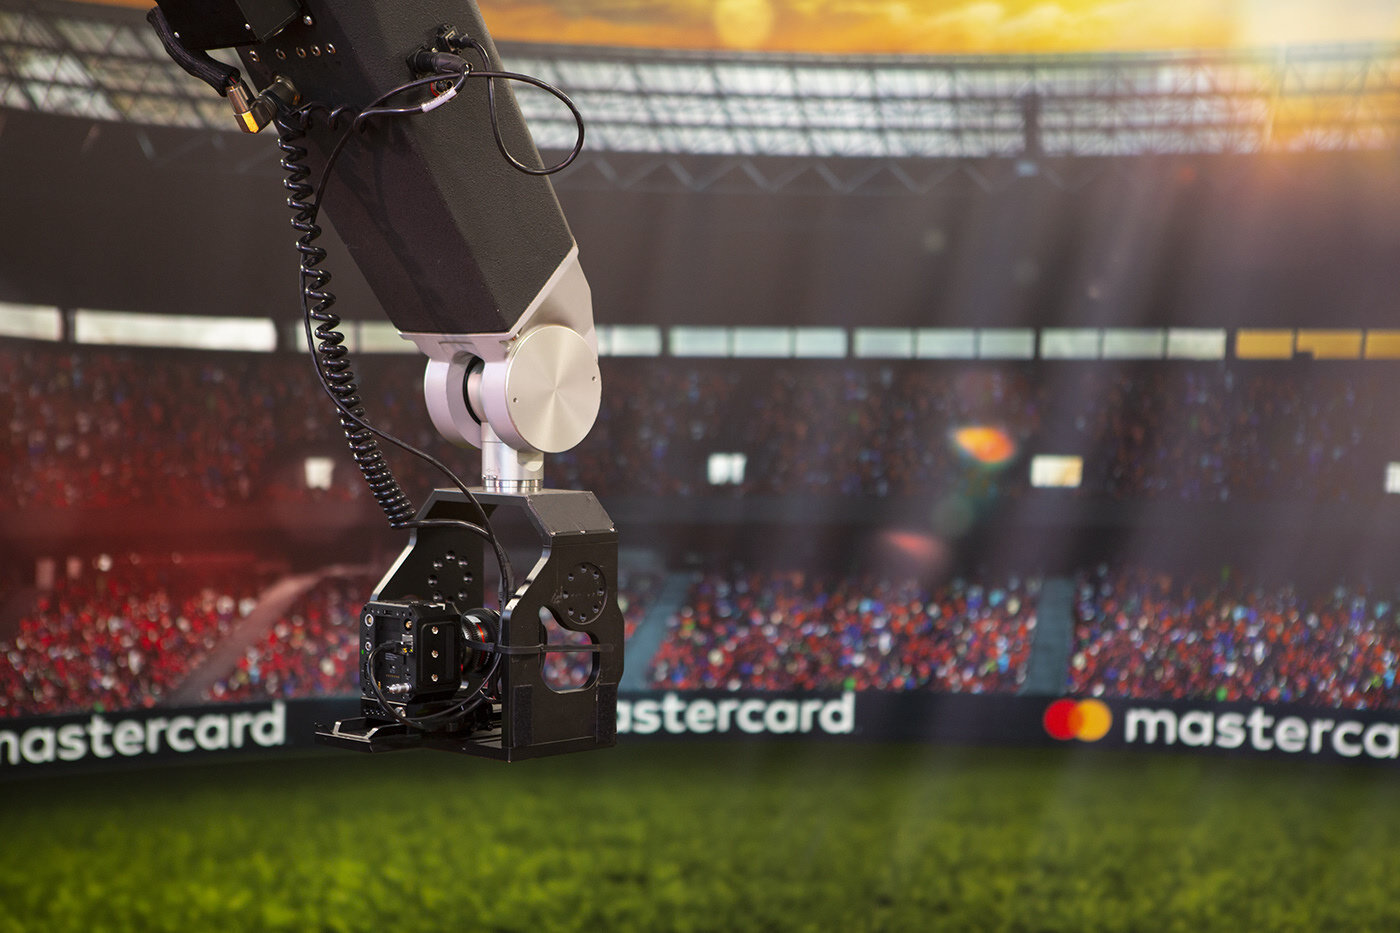 Mastercard Fanzone - UCL Final Madrid